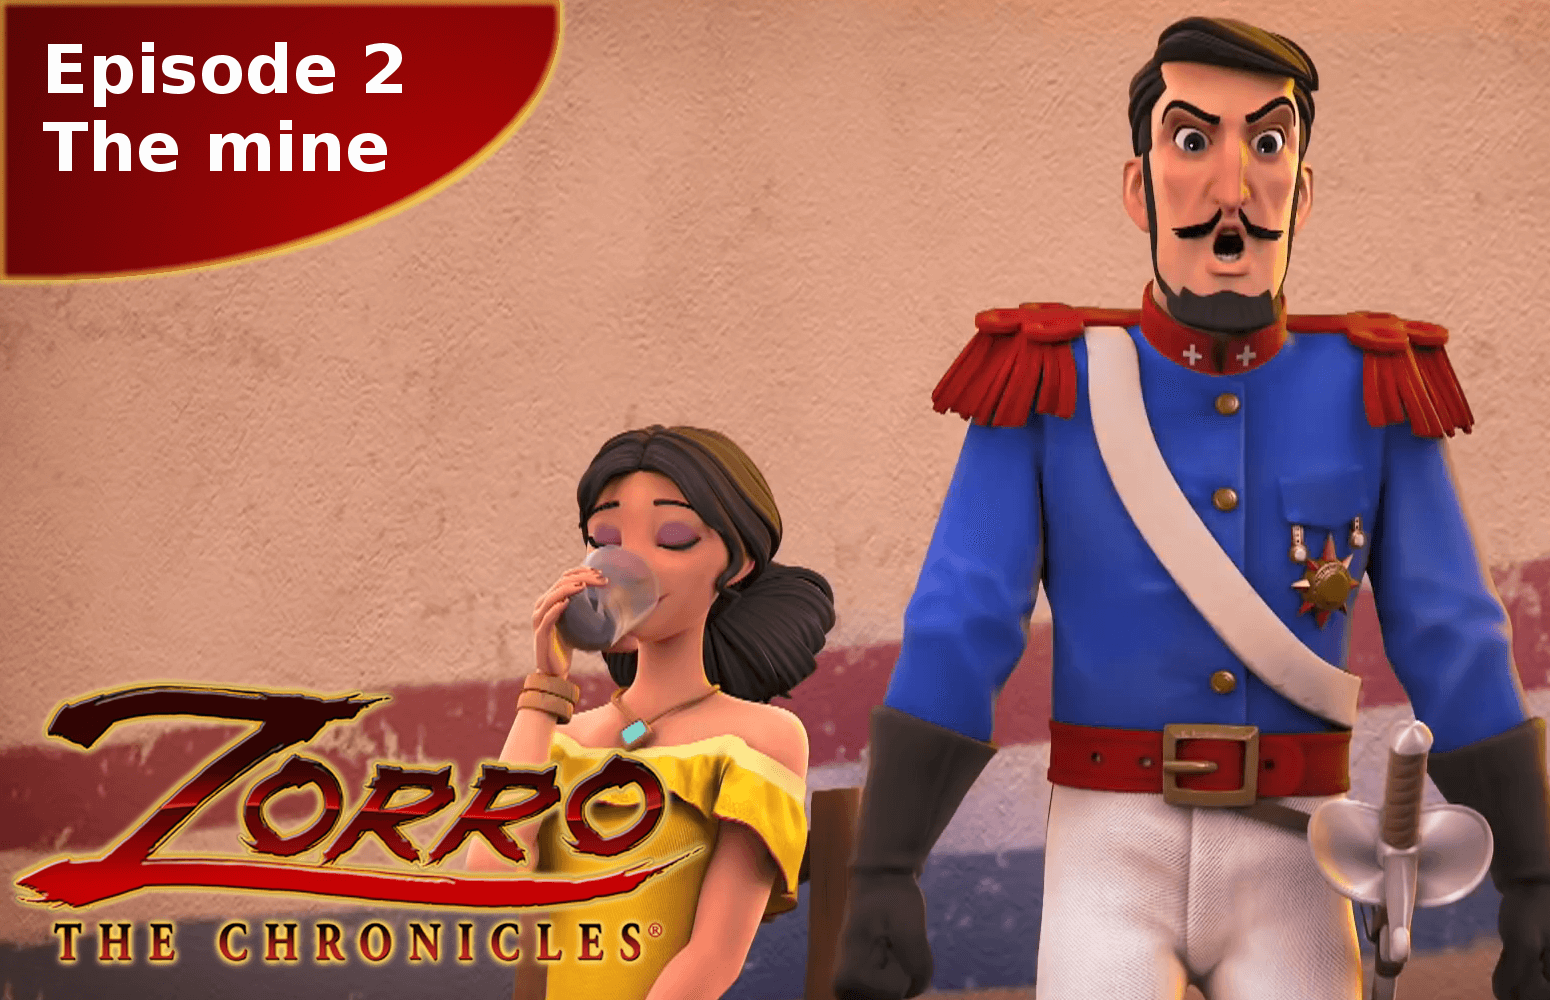 Zorro the Chronicles episode 2 The mine